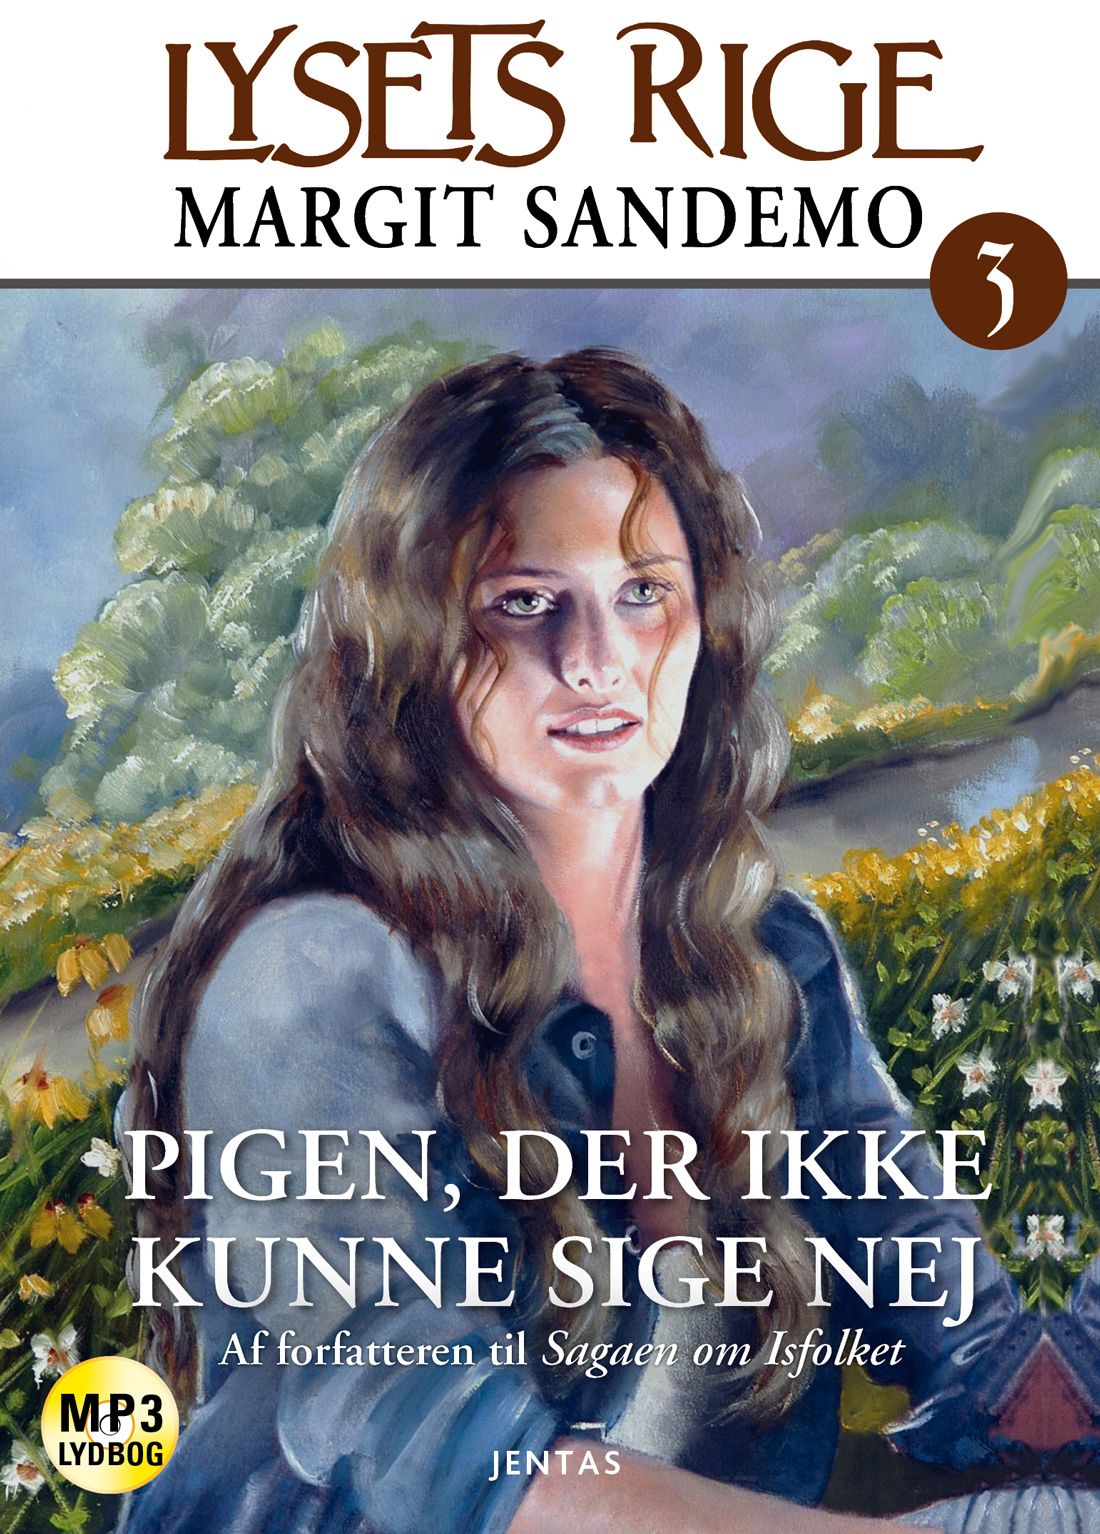 Lysets rige 3 - Pigen som ikke kunne sige nej, ljudbok av Margit Sandemo